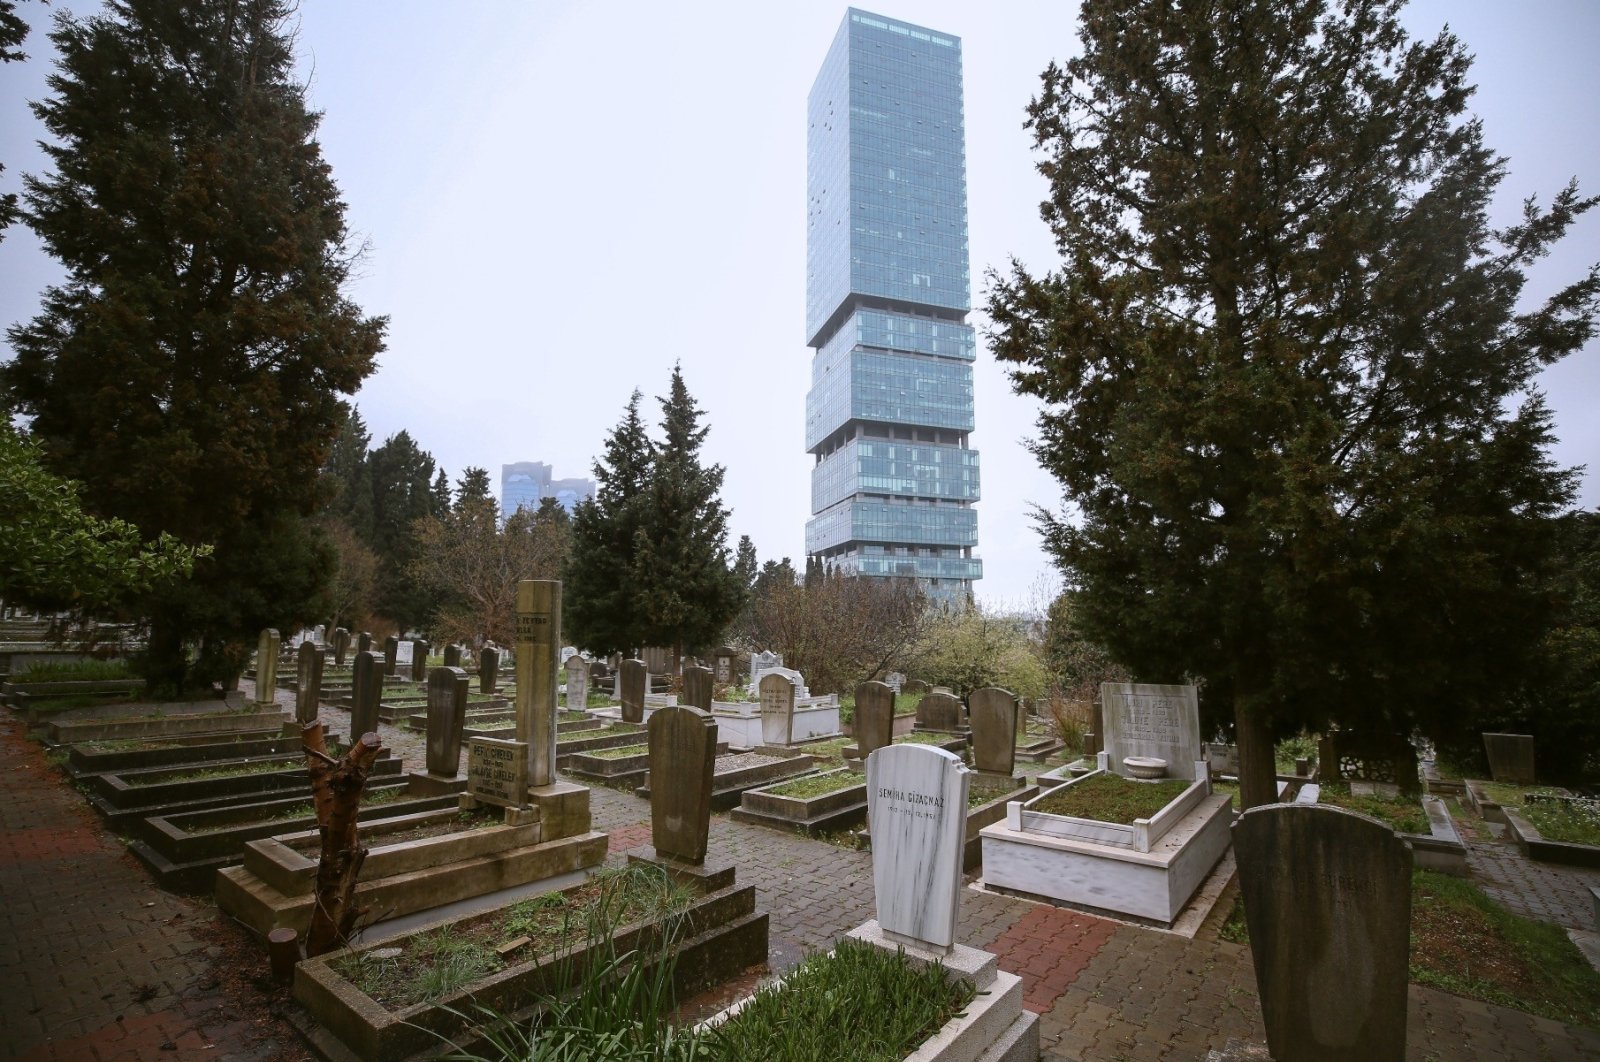 Istanbul's new grave, funeral tariffs spark concern | Daily Sabah - Daily Sabah